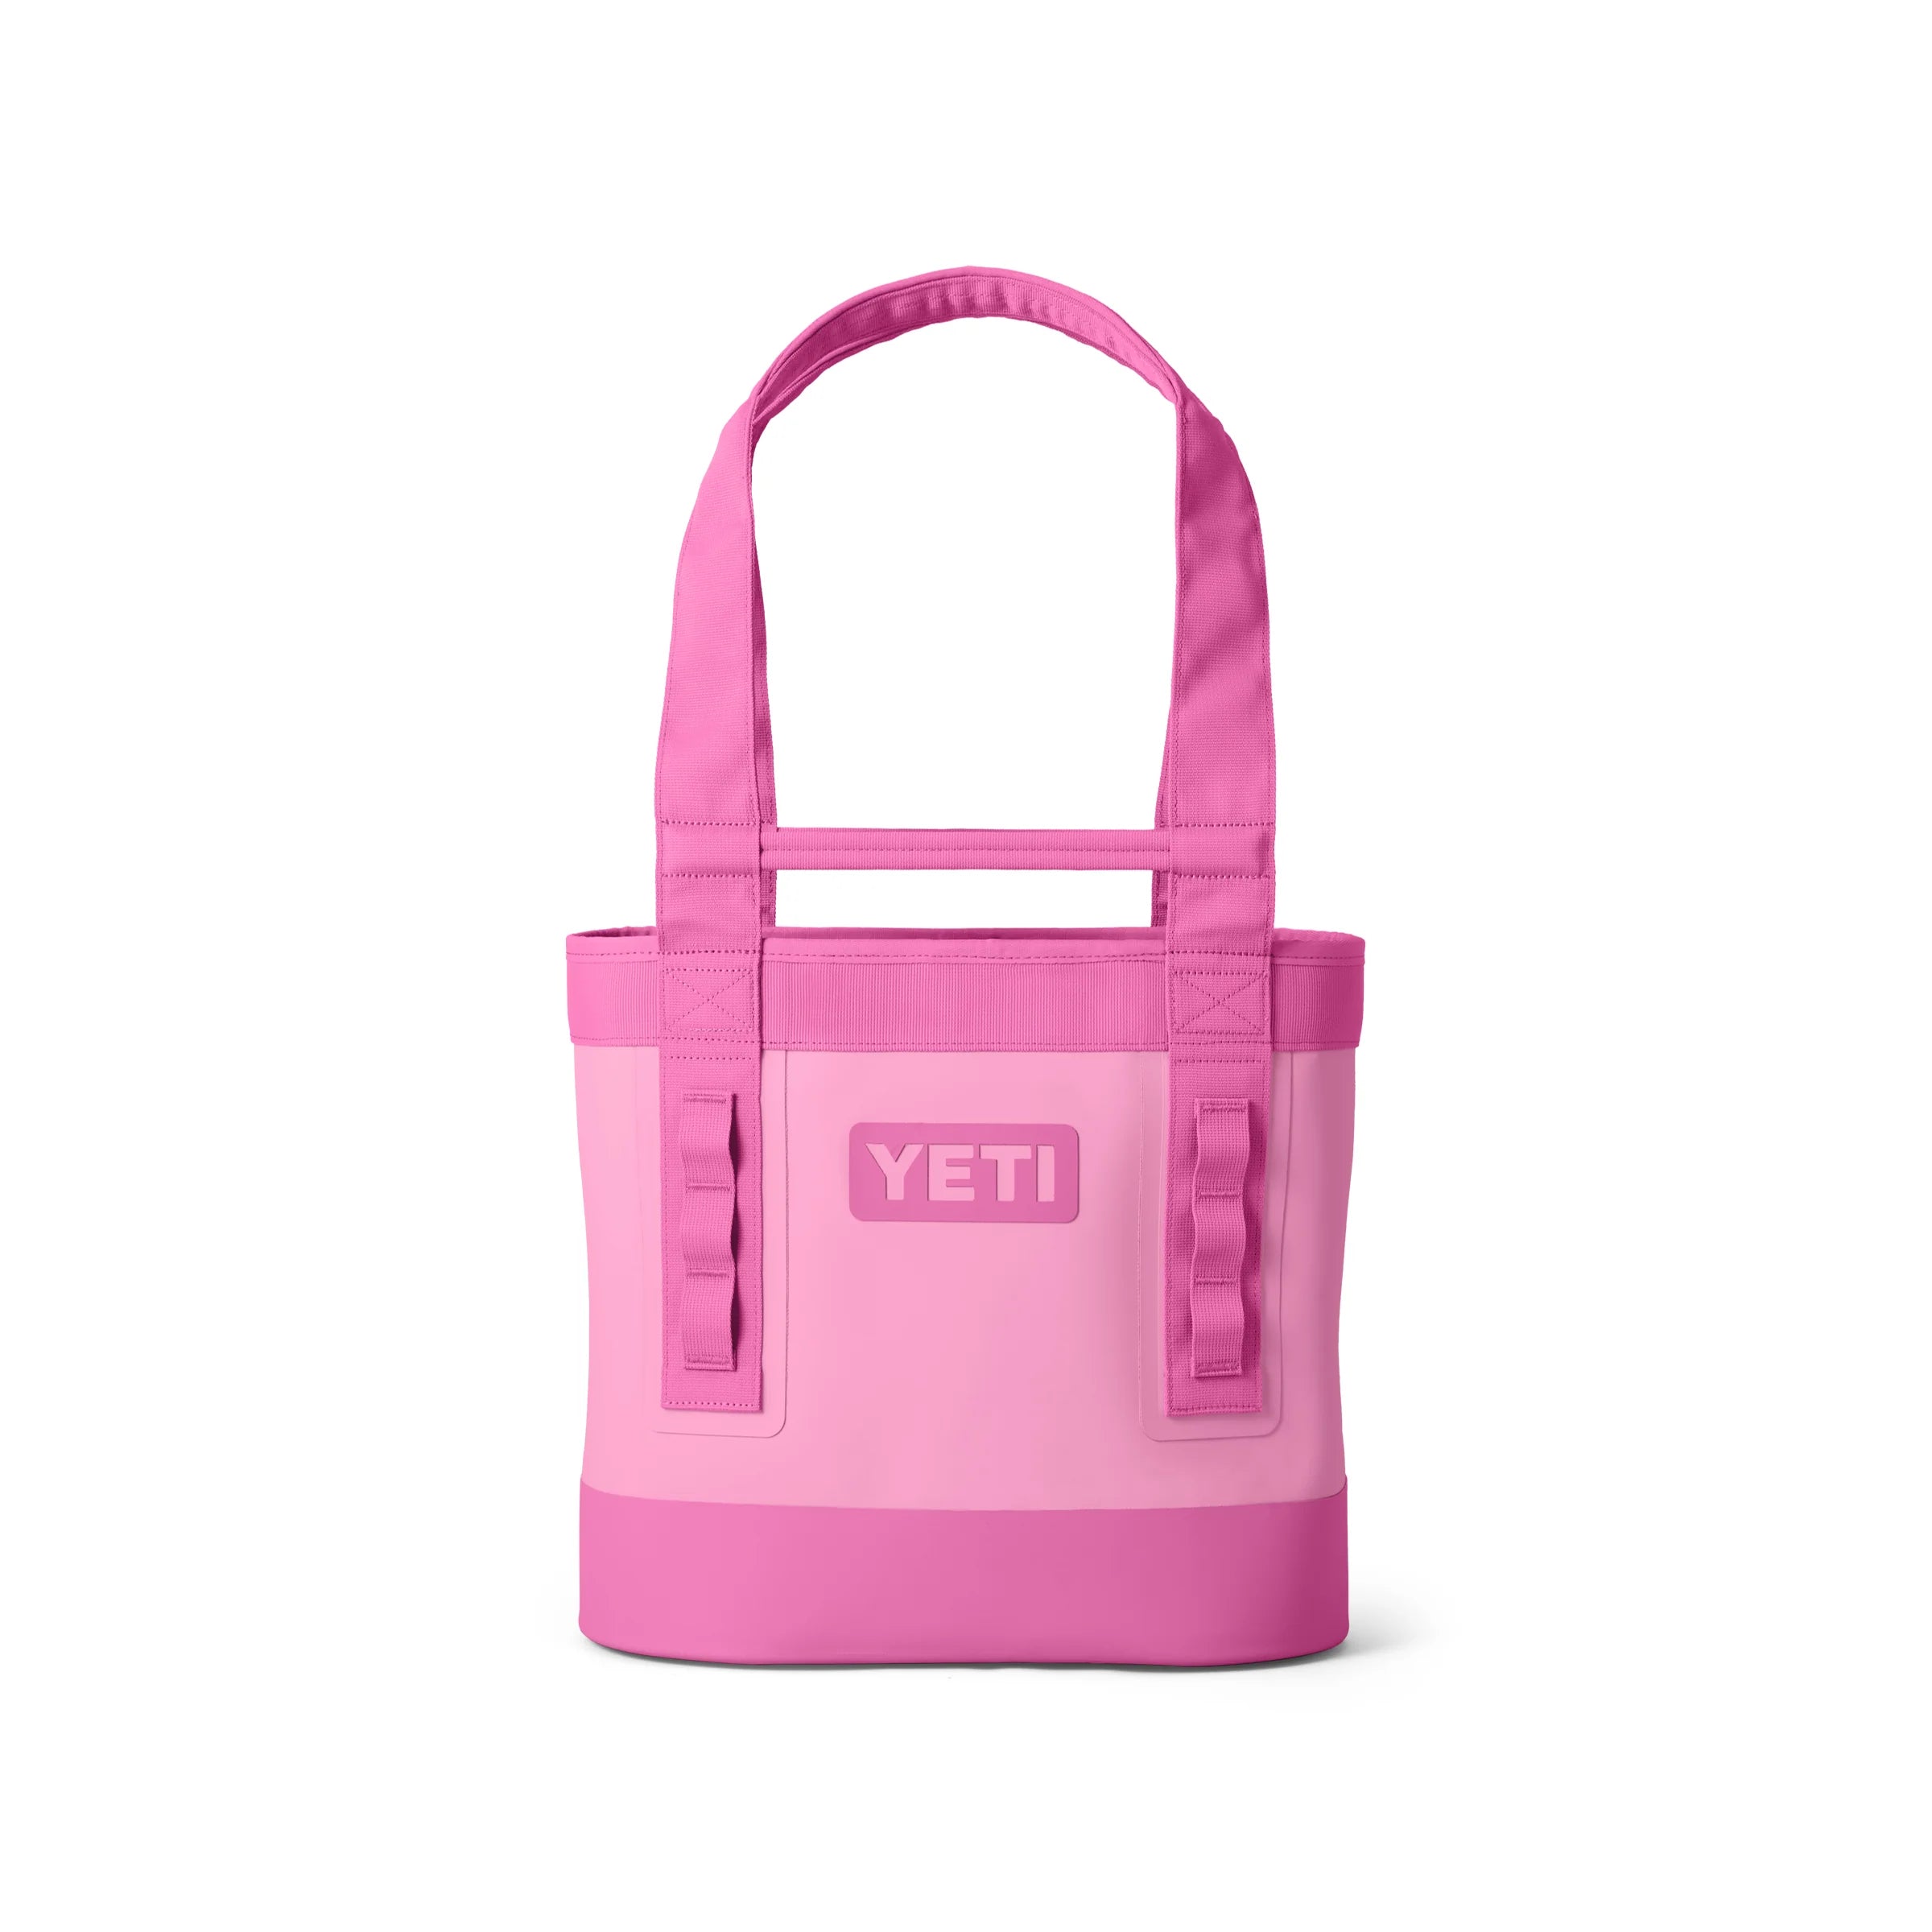 YETI Camino Carryall 20 Tote Bag - Power Pink - Image 1